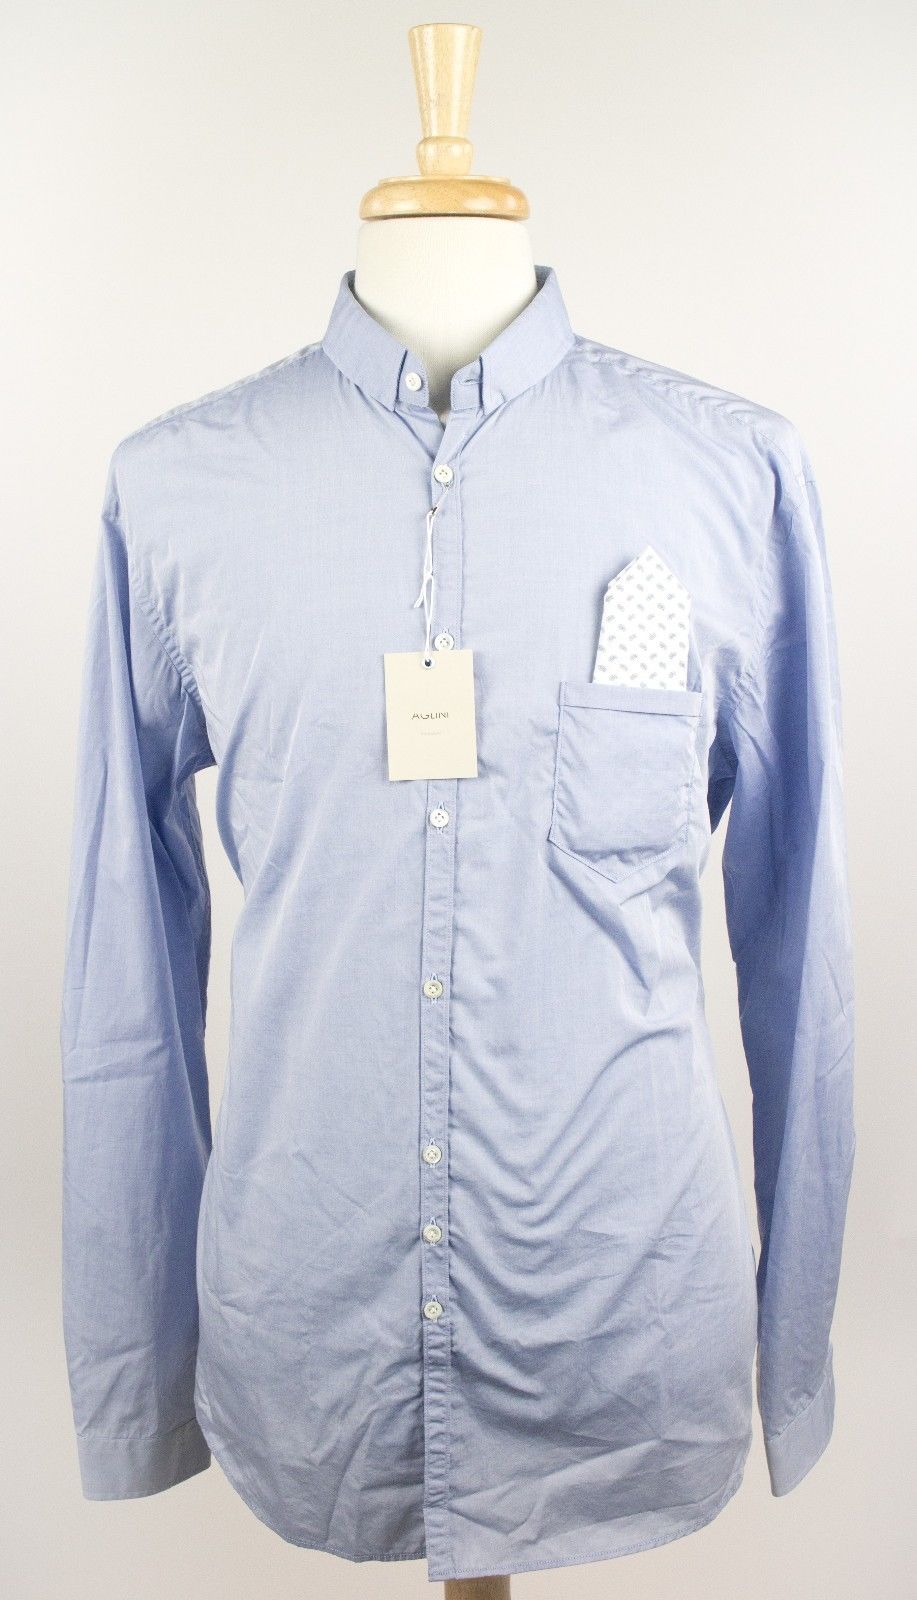 Aglini Blue 100% Cotton Long Sleeve Dress Shirt With Pocket Square! - Blue